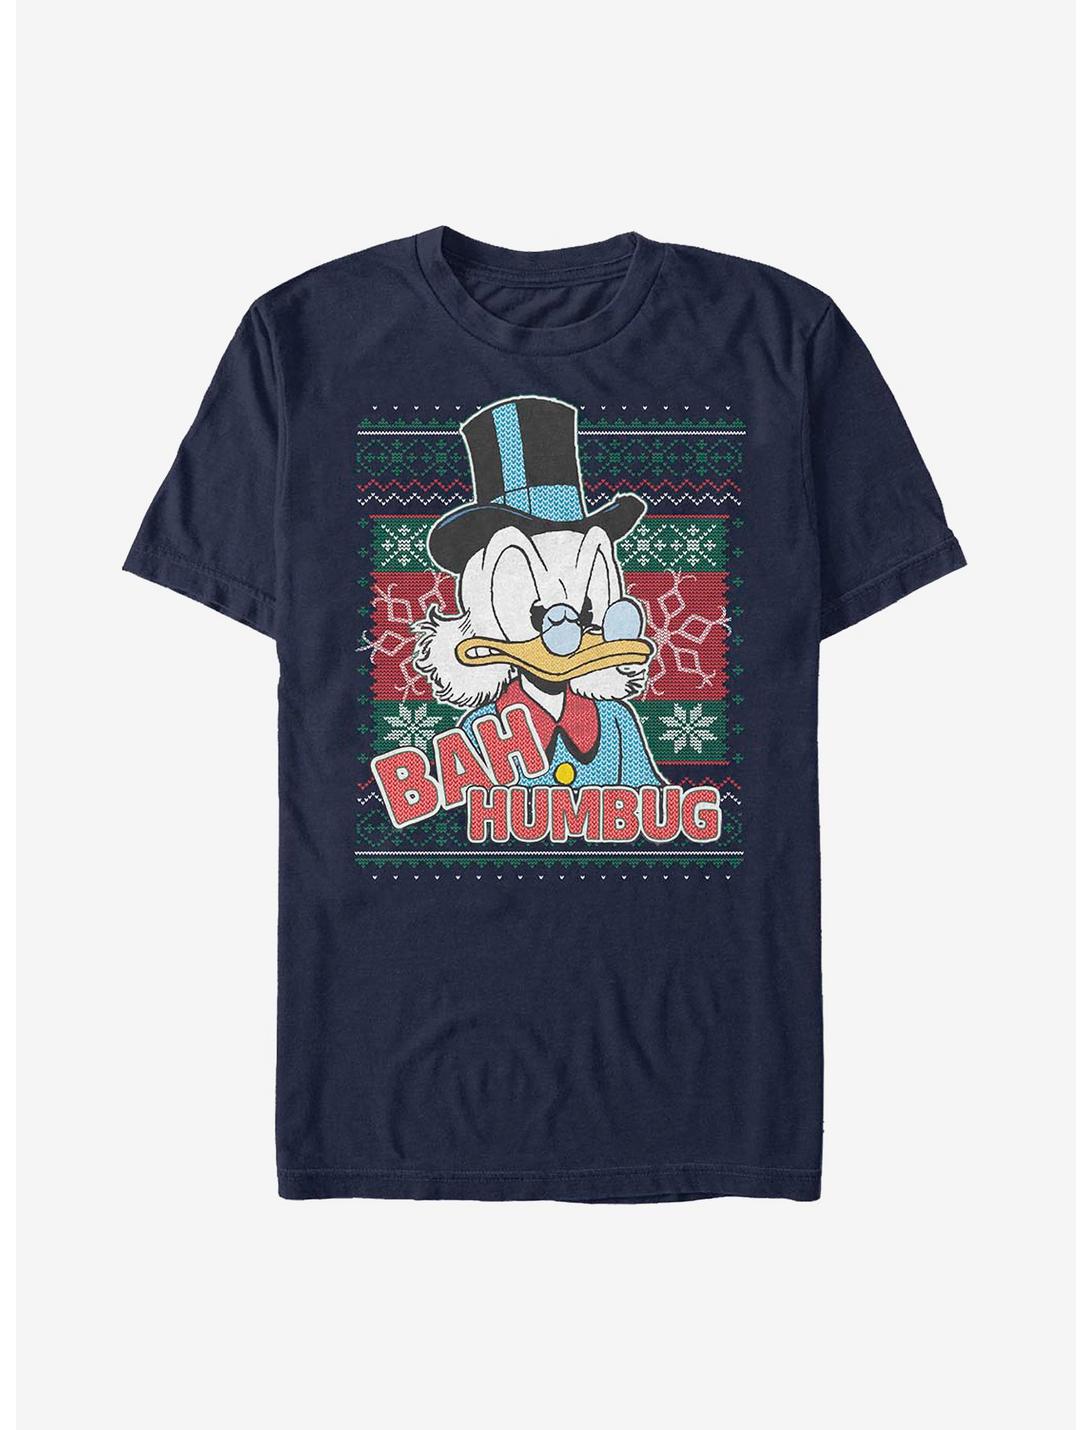 Disney Ducktales Bah Humbug Scroog T-Shirt, NAVY, hi-res